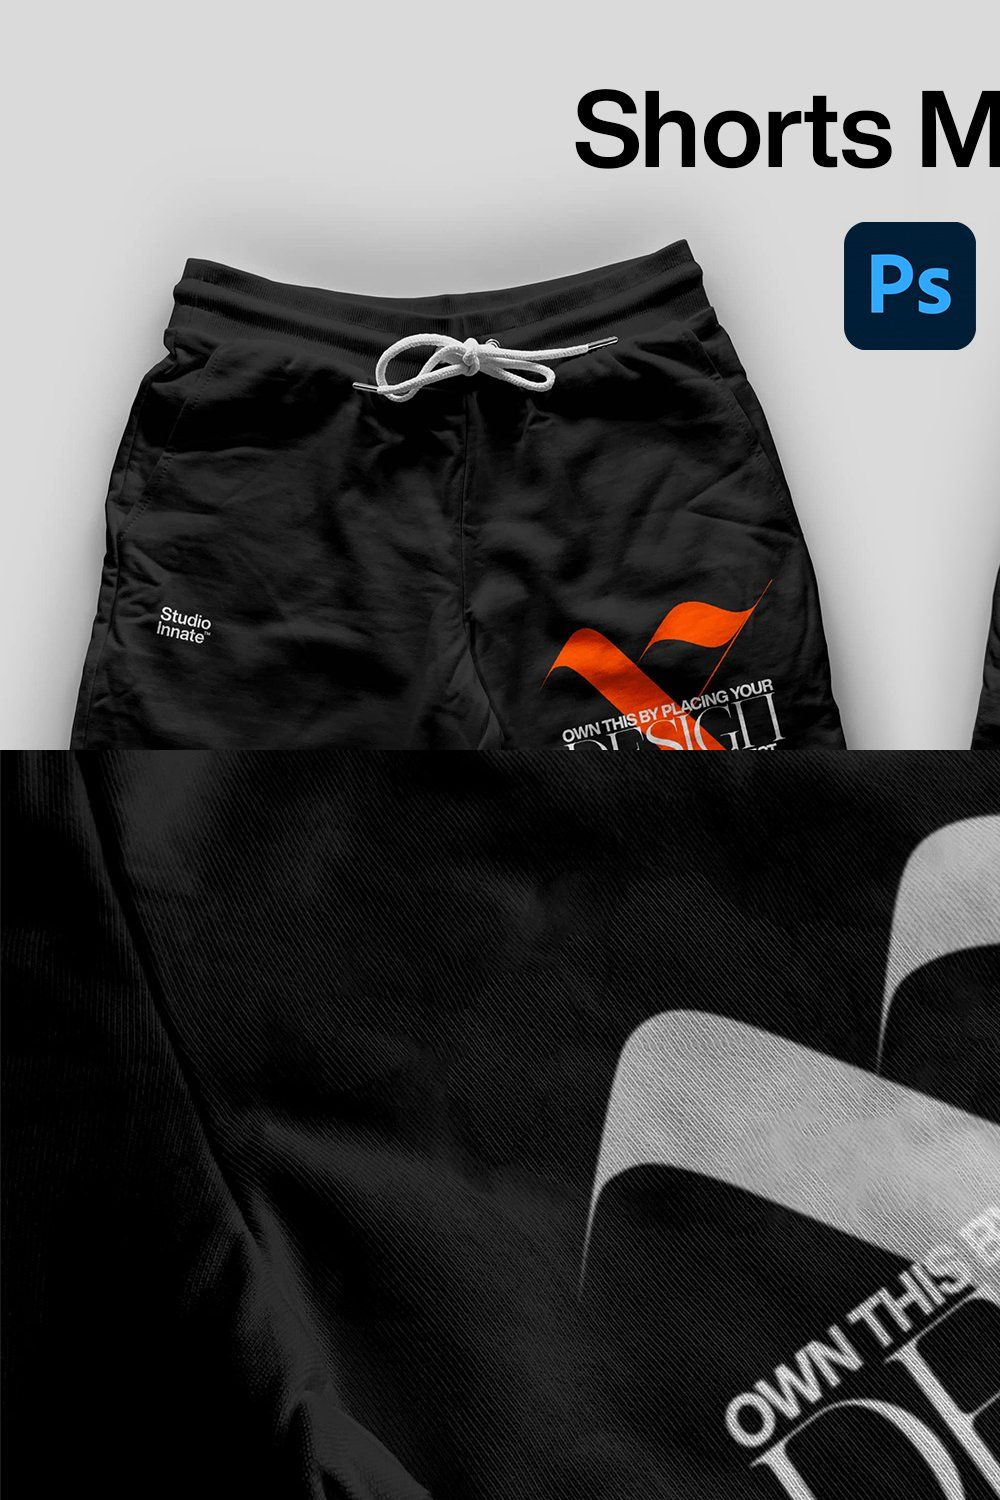 Shorts - Mockup Bundle pinterest preview image.